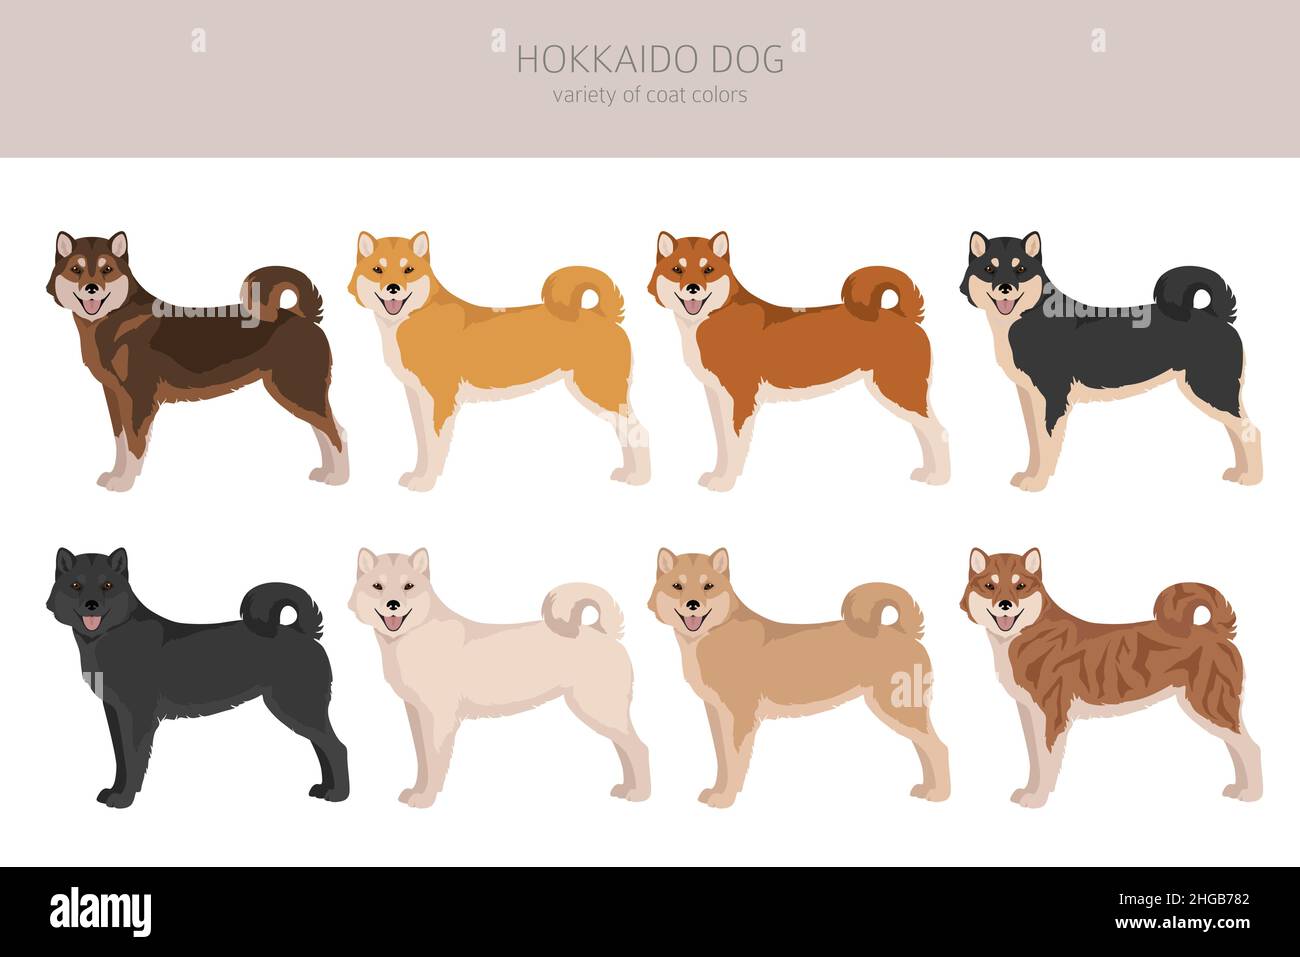 Hokkaido dog, Ainu dog clipart. Different poses, coat colors set.  Vector illustration Stock Vector